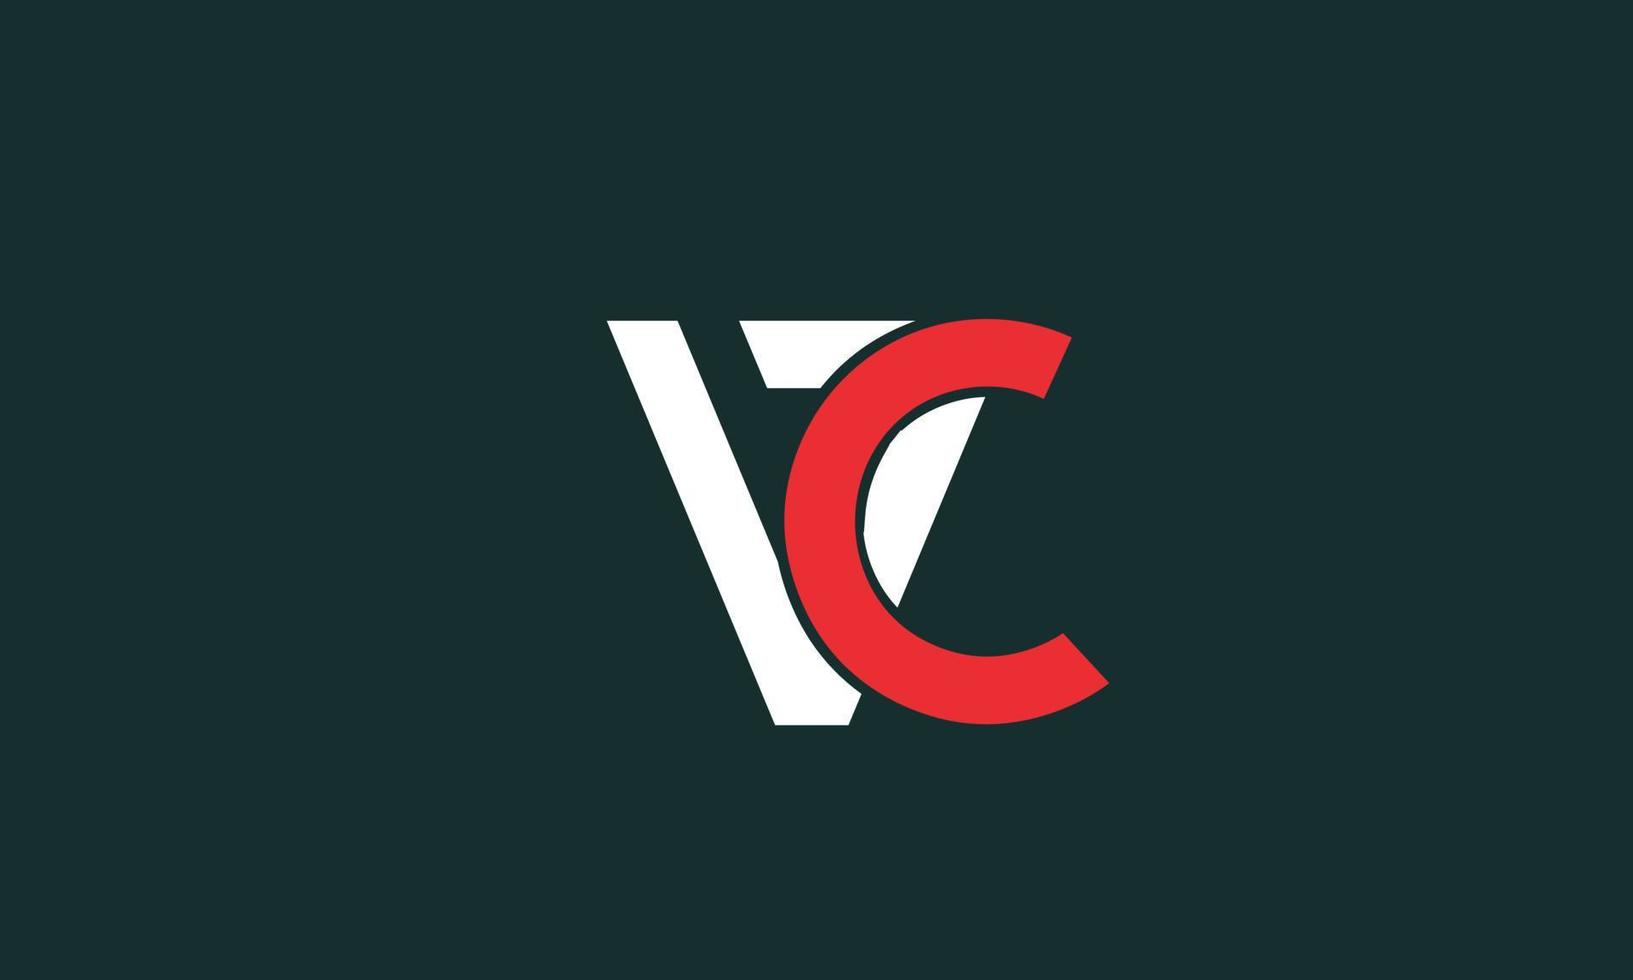 alfabet letters initialen monogram logo vc, cv, v en c vector